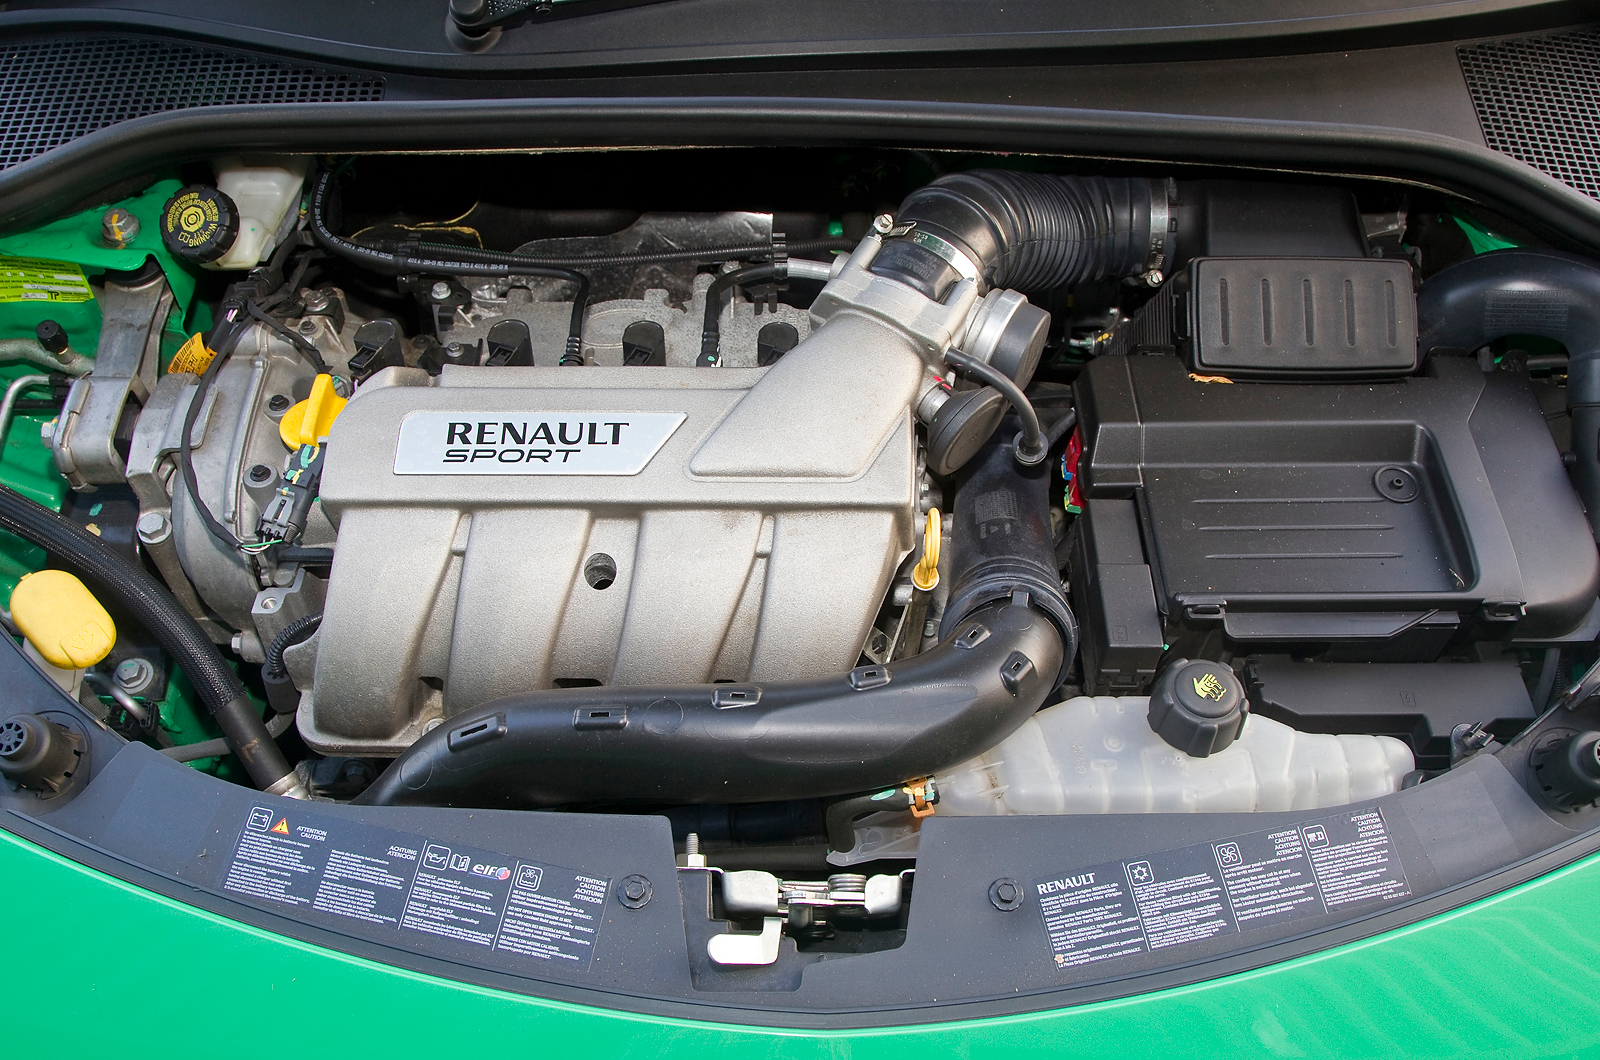 2.0-litre Renault Clio RS engine